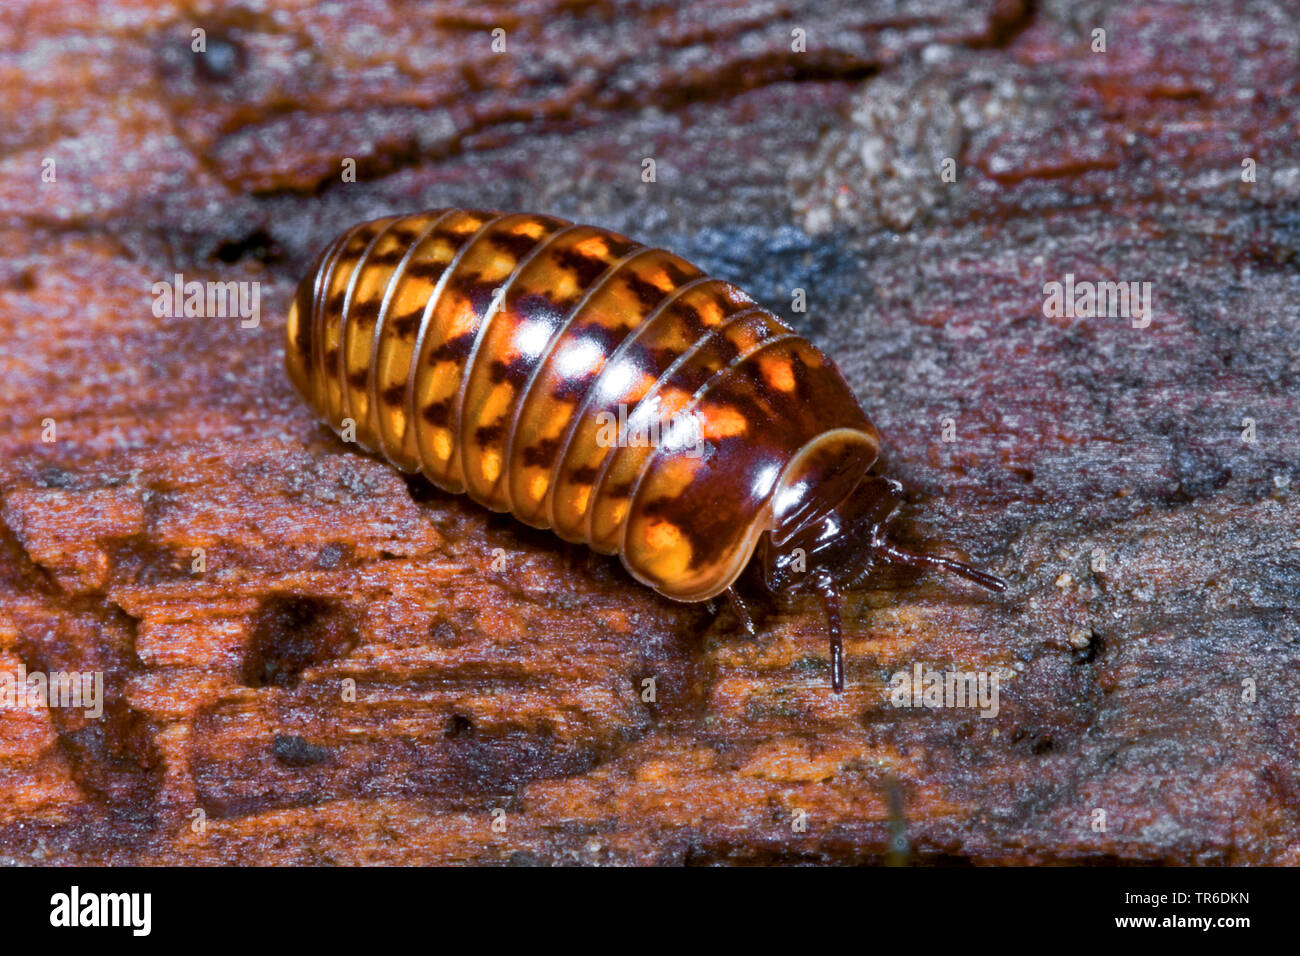 pill millipede (Glomeris hexasticha), on wood, Germany Stock Photo